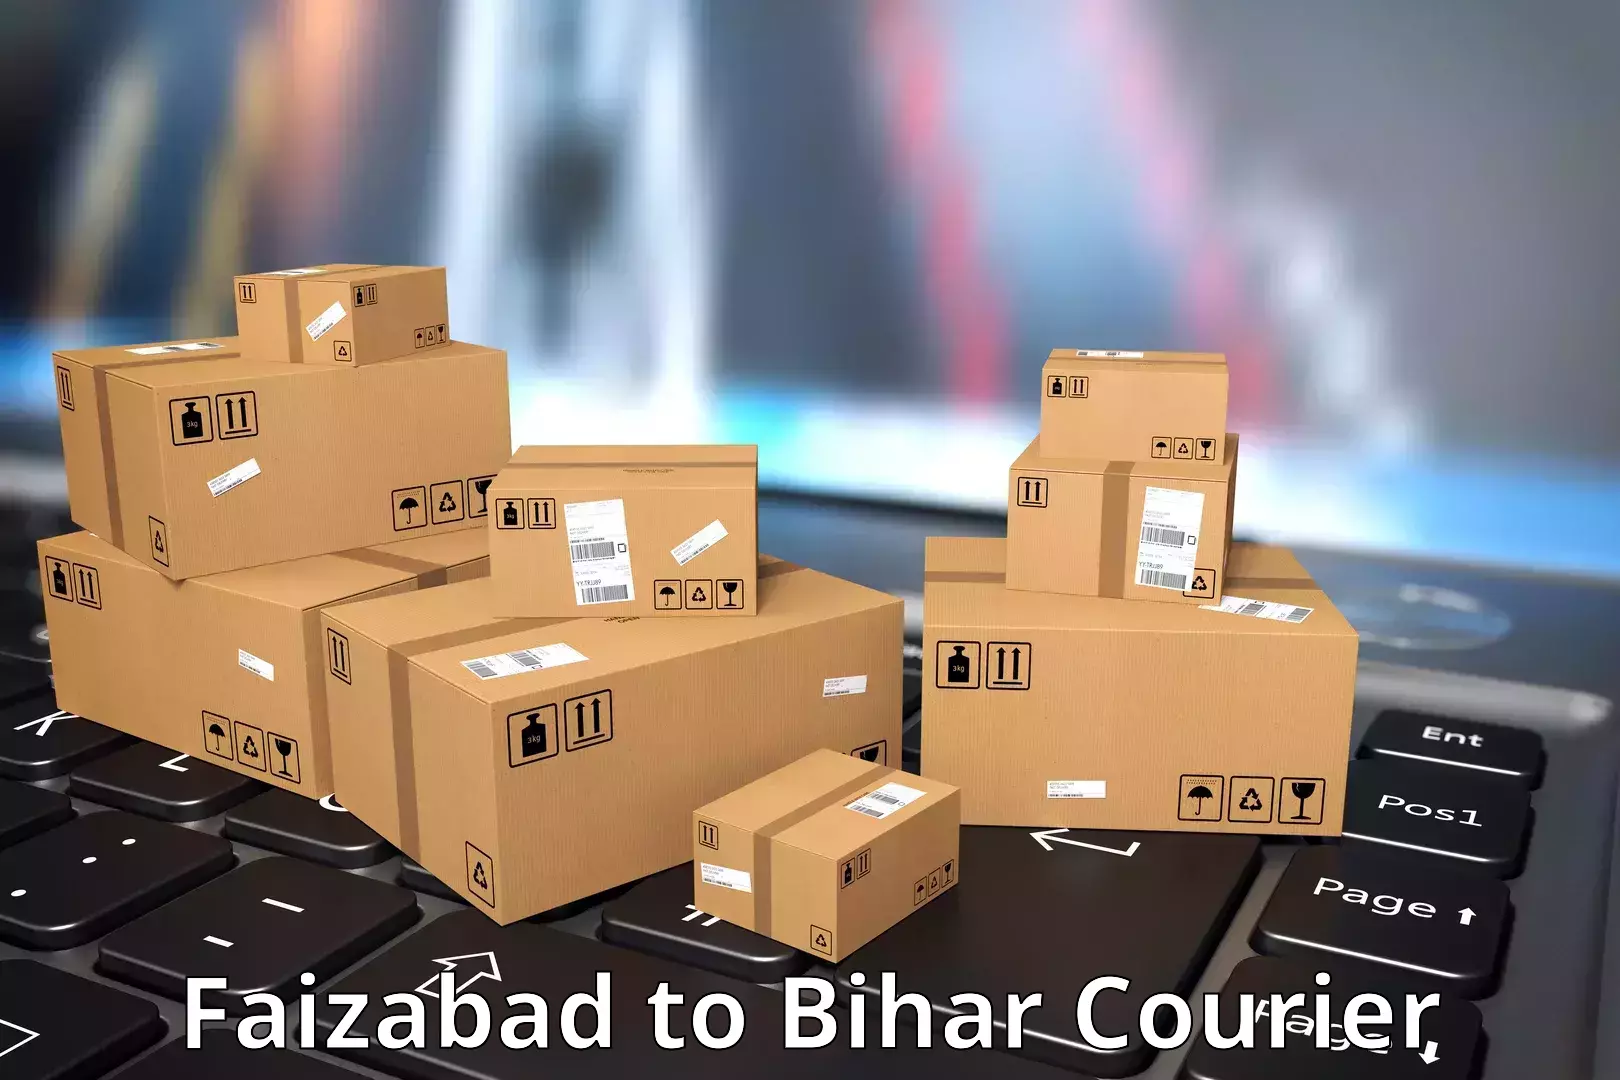 Courier service innovation Faizabad to Bihar